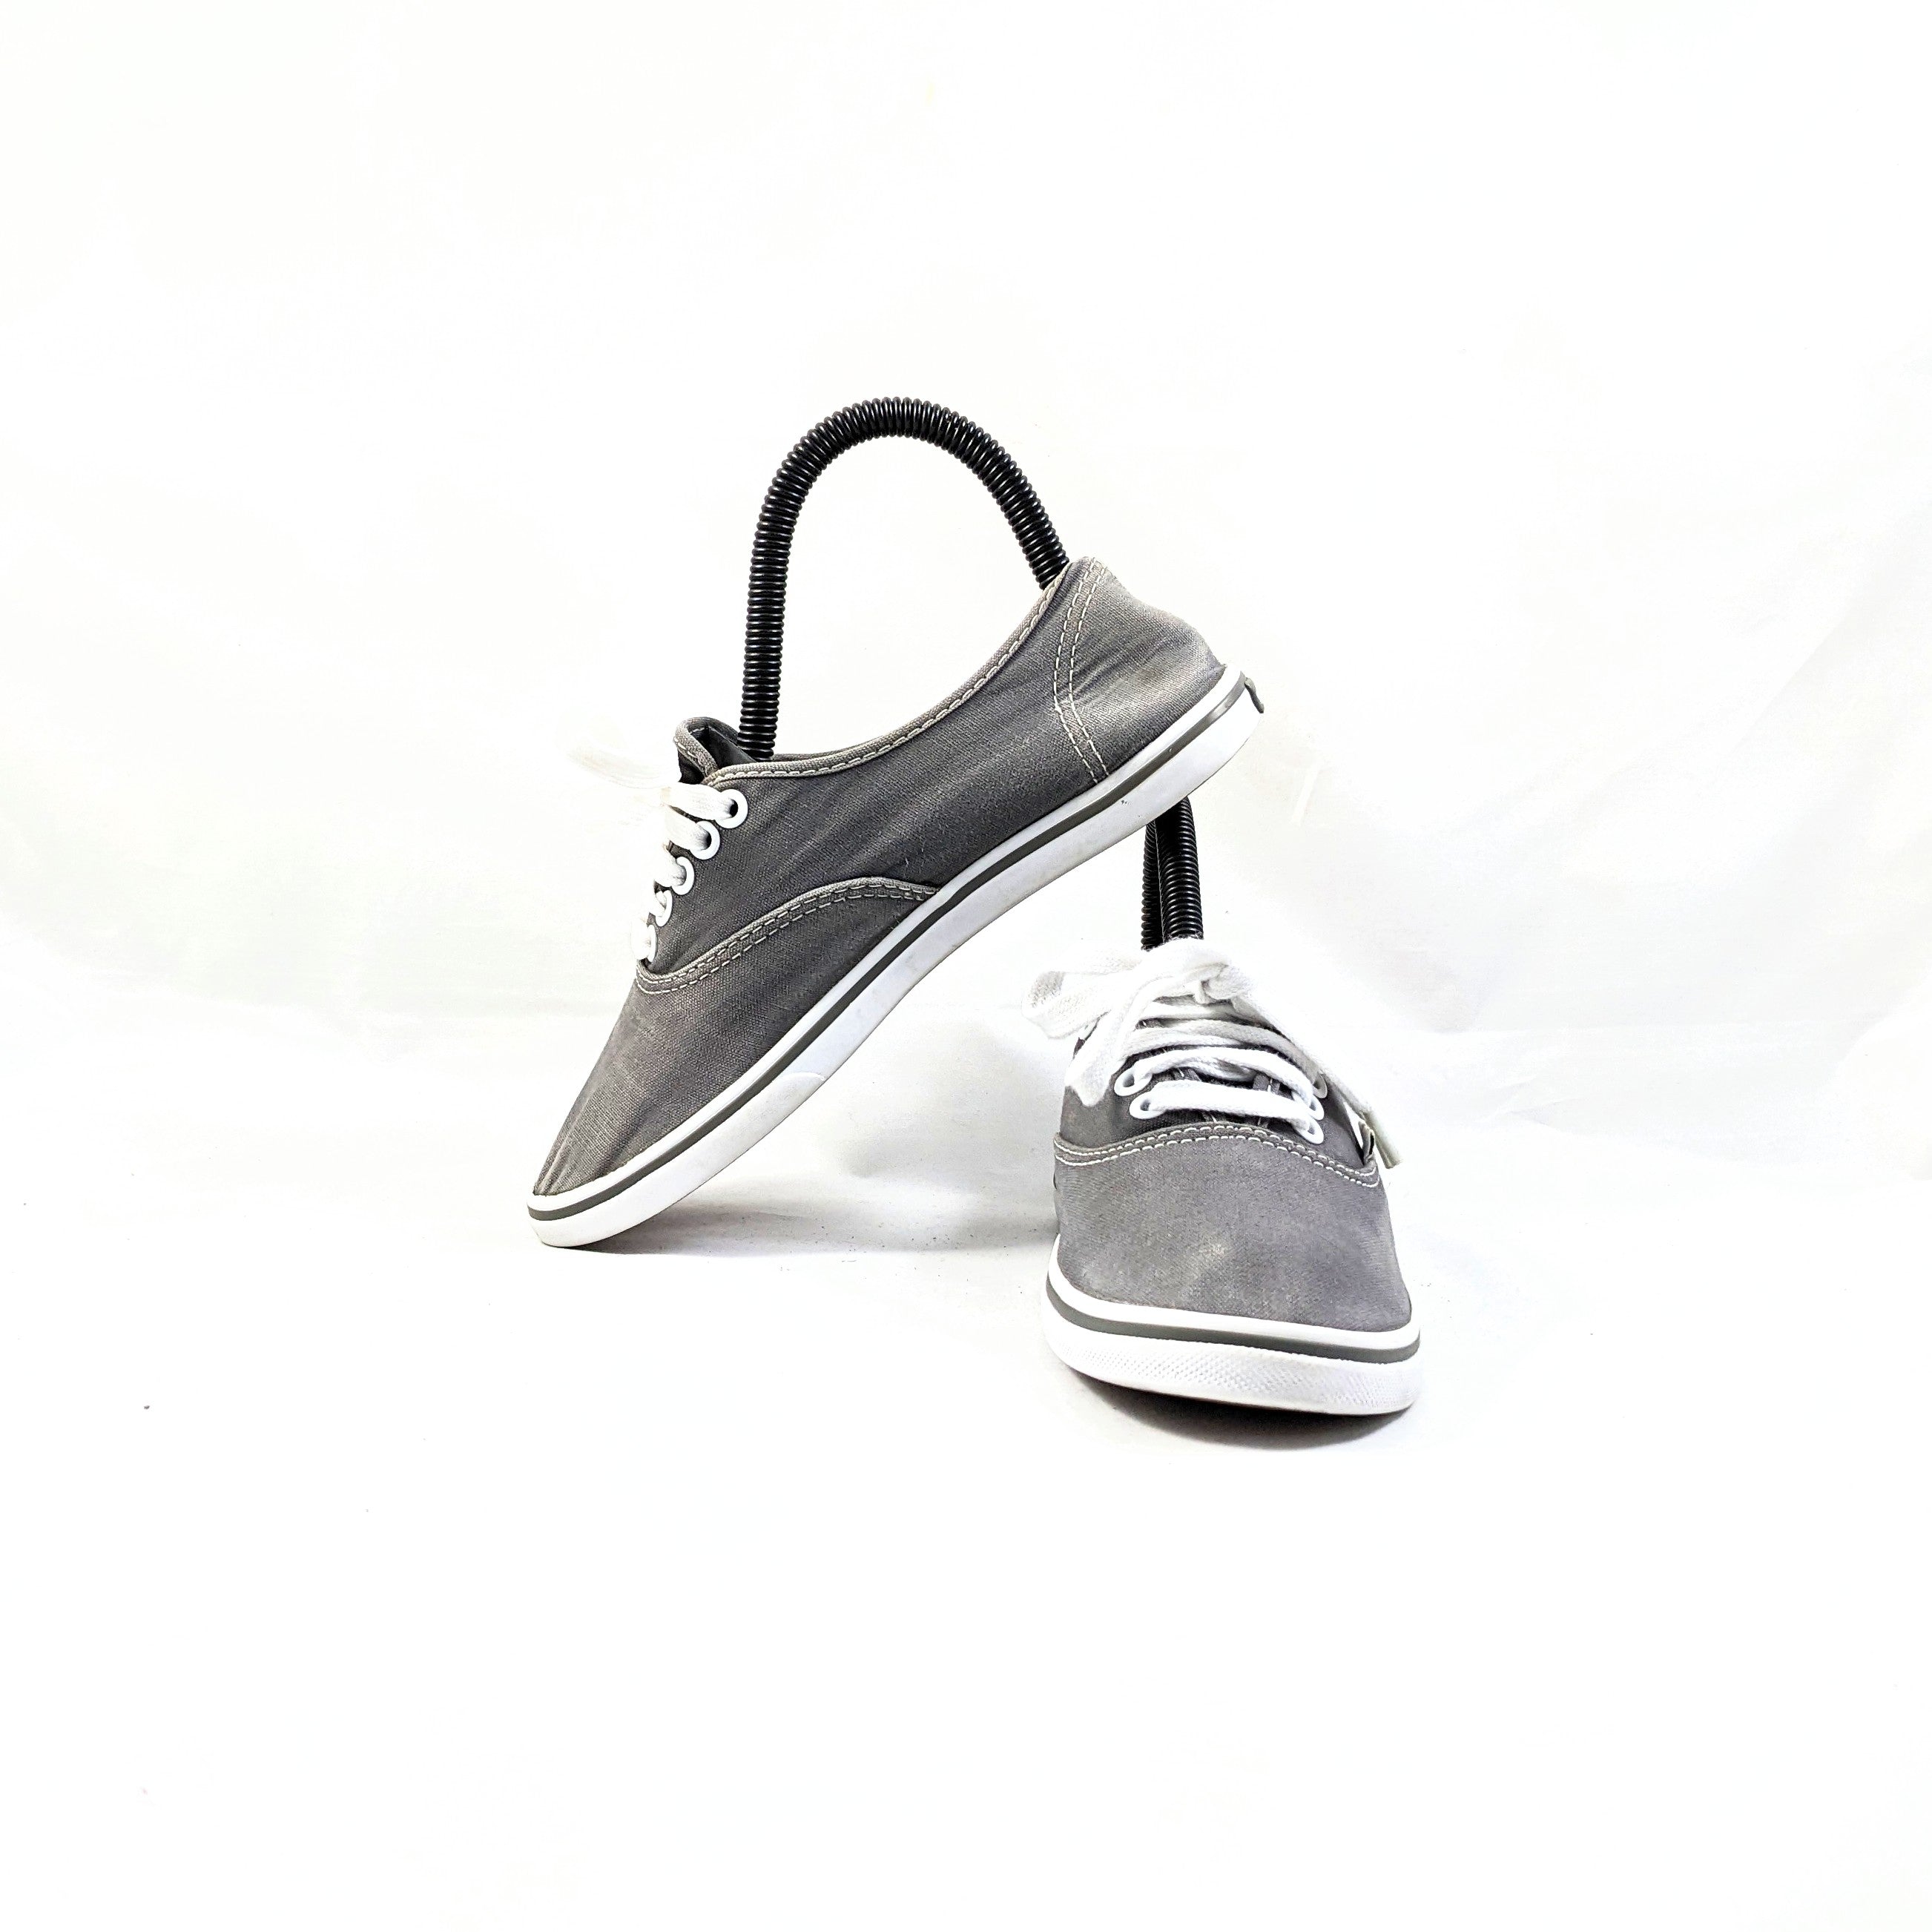 Vans Grey Sneakers